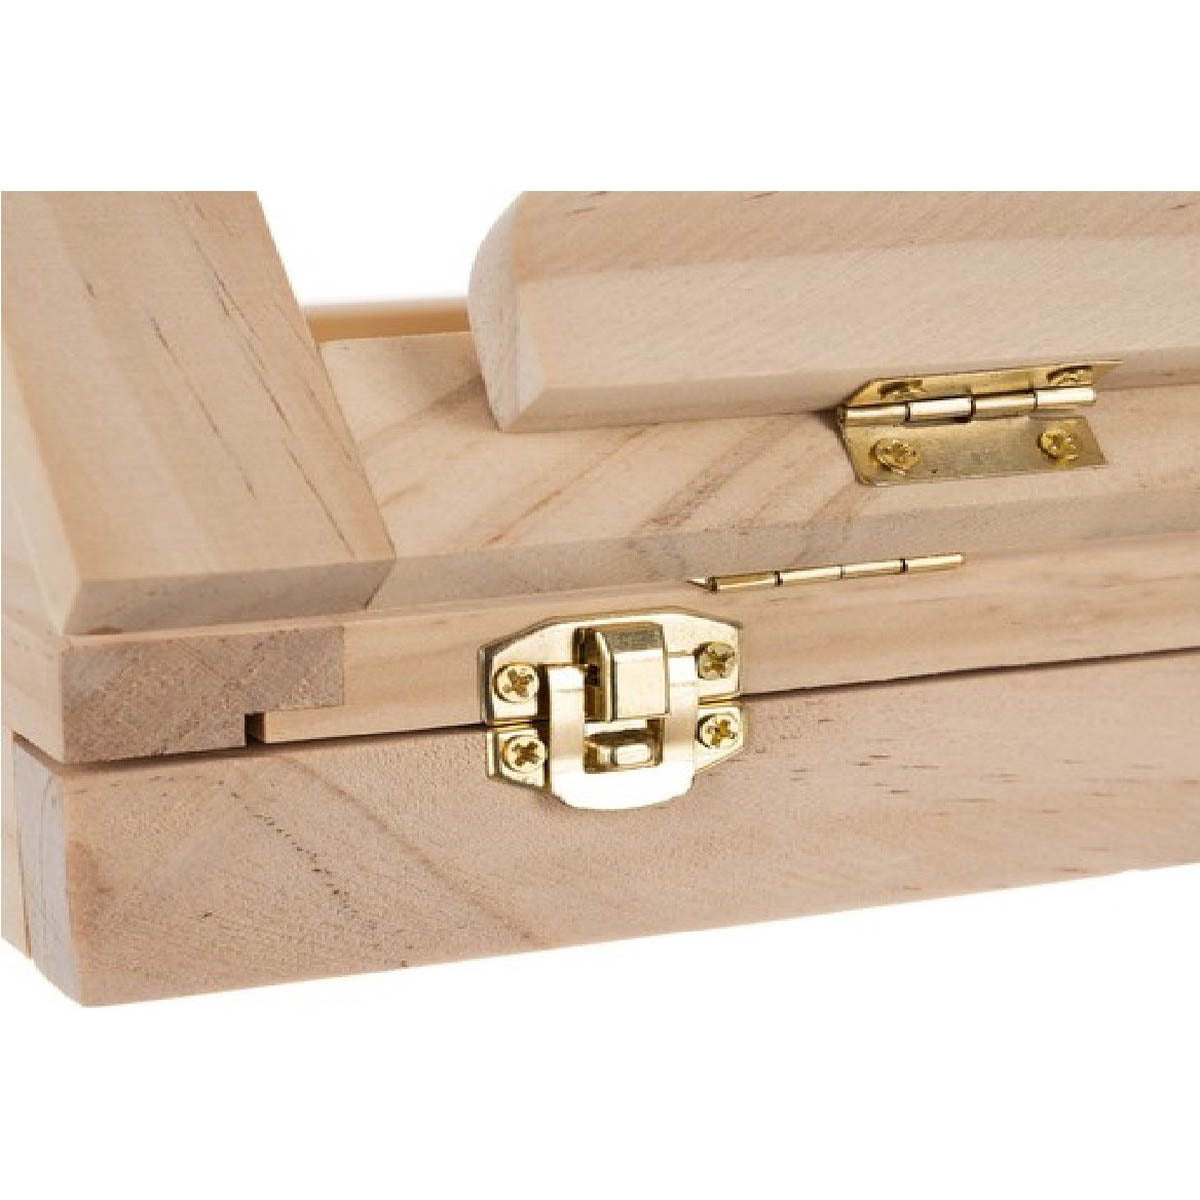 <tc>Ariko</tc> Portable Wooden Easel - Drawing Case - Table Easel - Drawing Set - Portable Easel - 46 Pieces